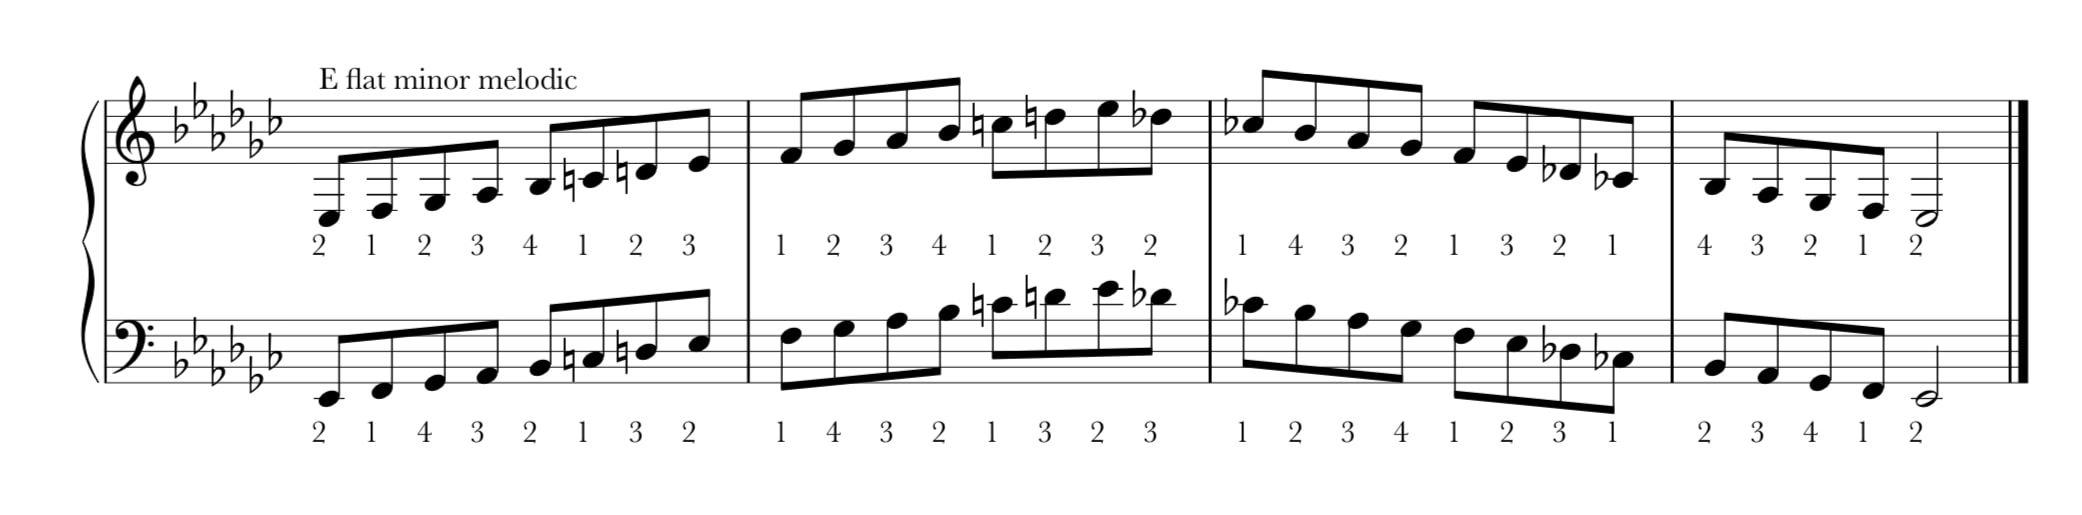 b flat minor melodic scale